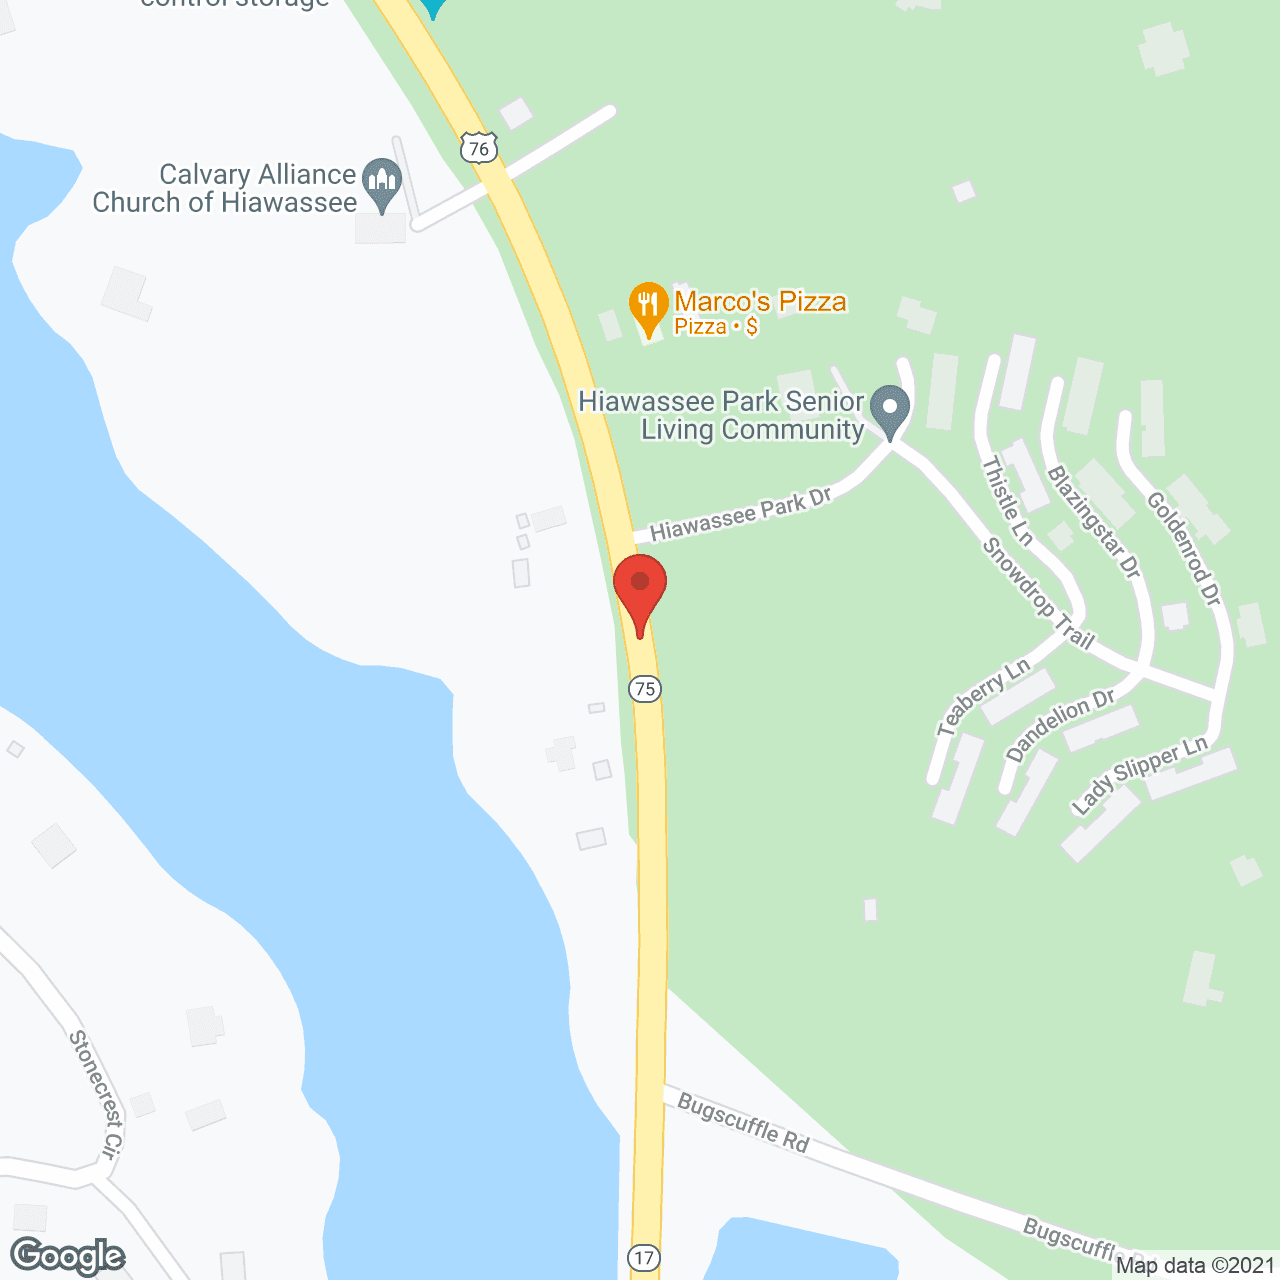 Hiawassee Park in google map